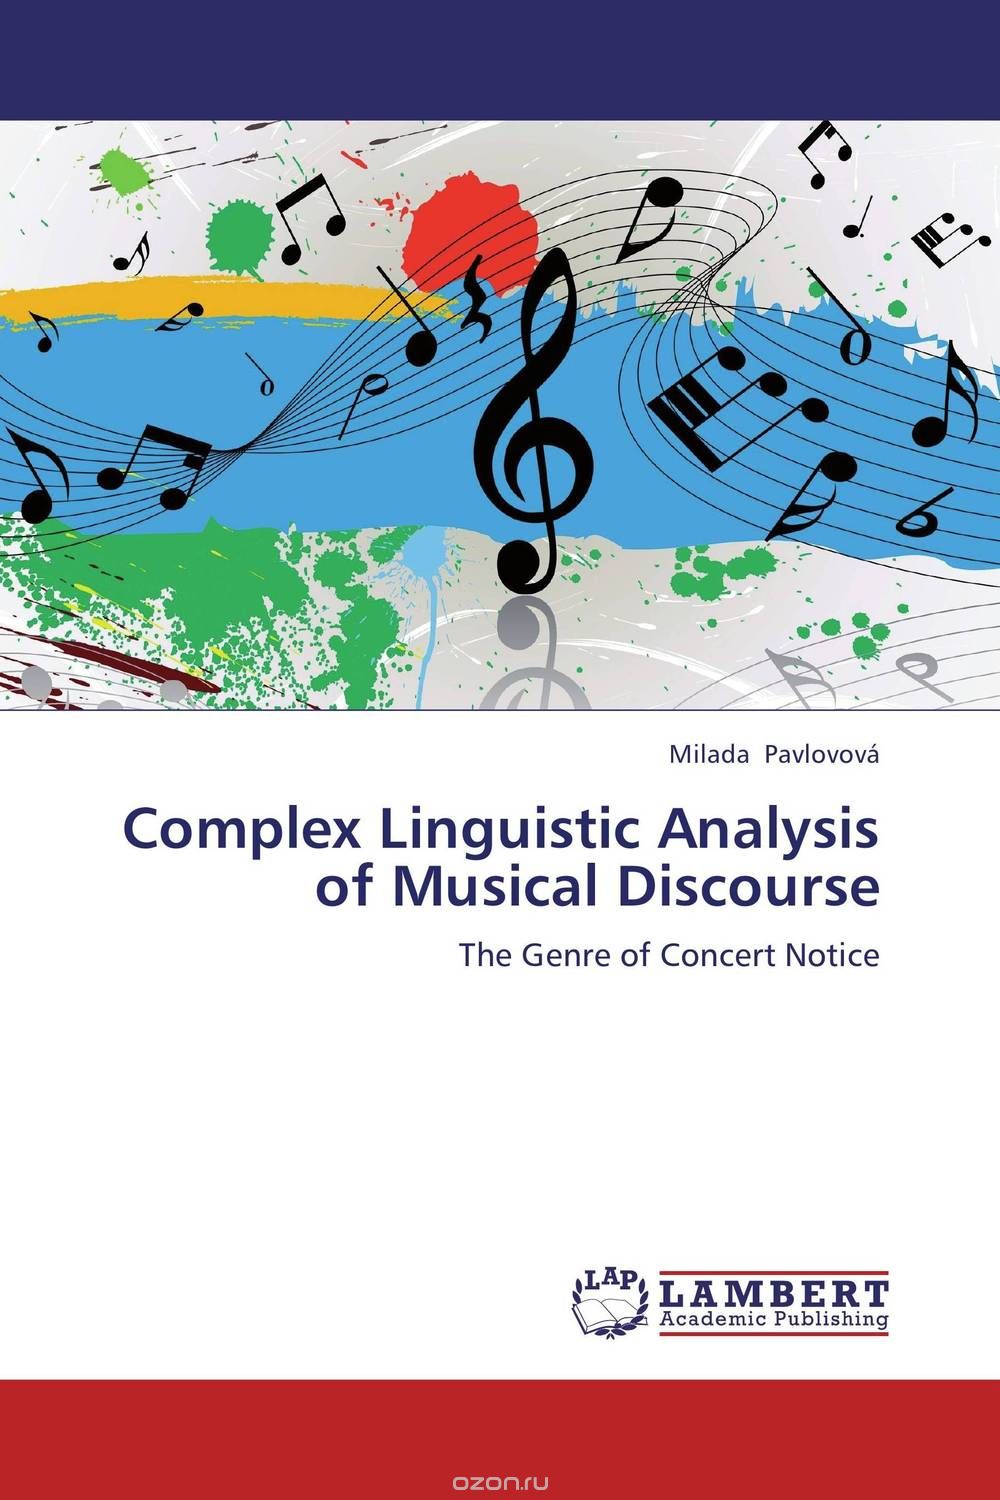 Скачать книгу "Complex Linguistic Analysis of Musical Discourse"